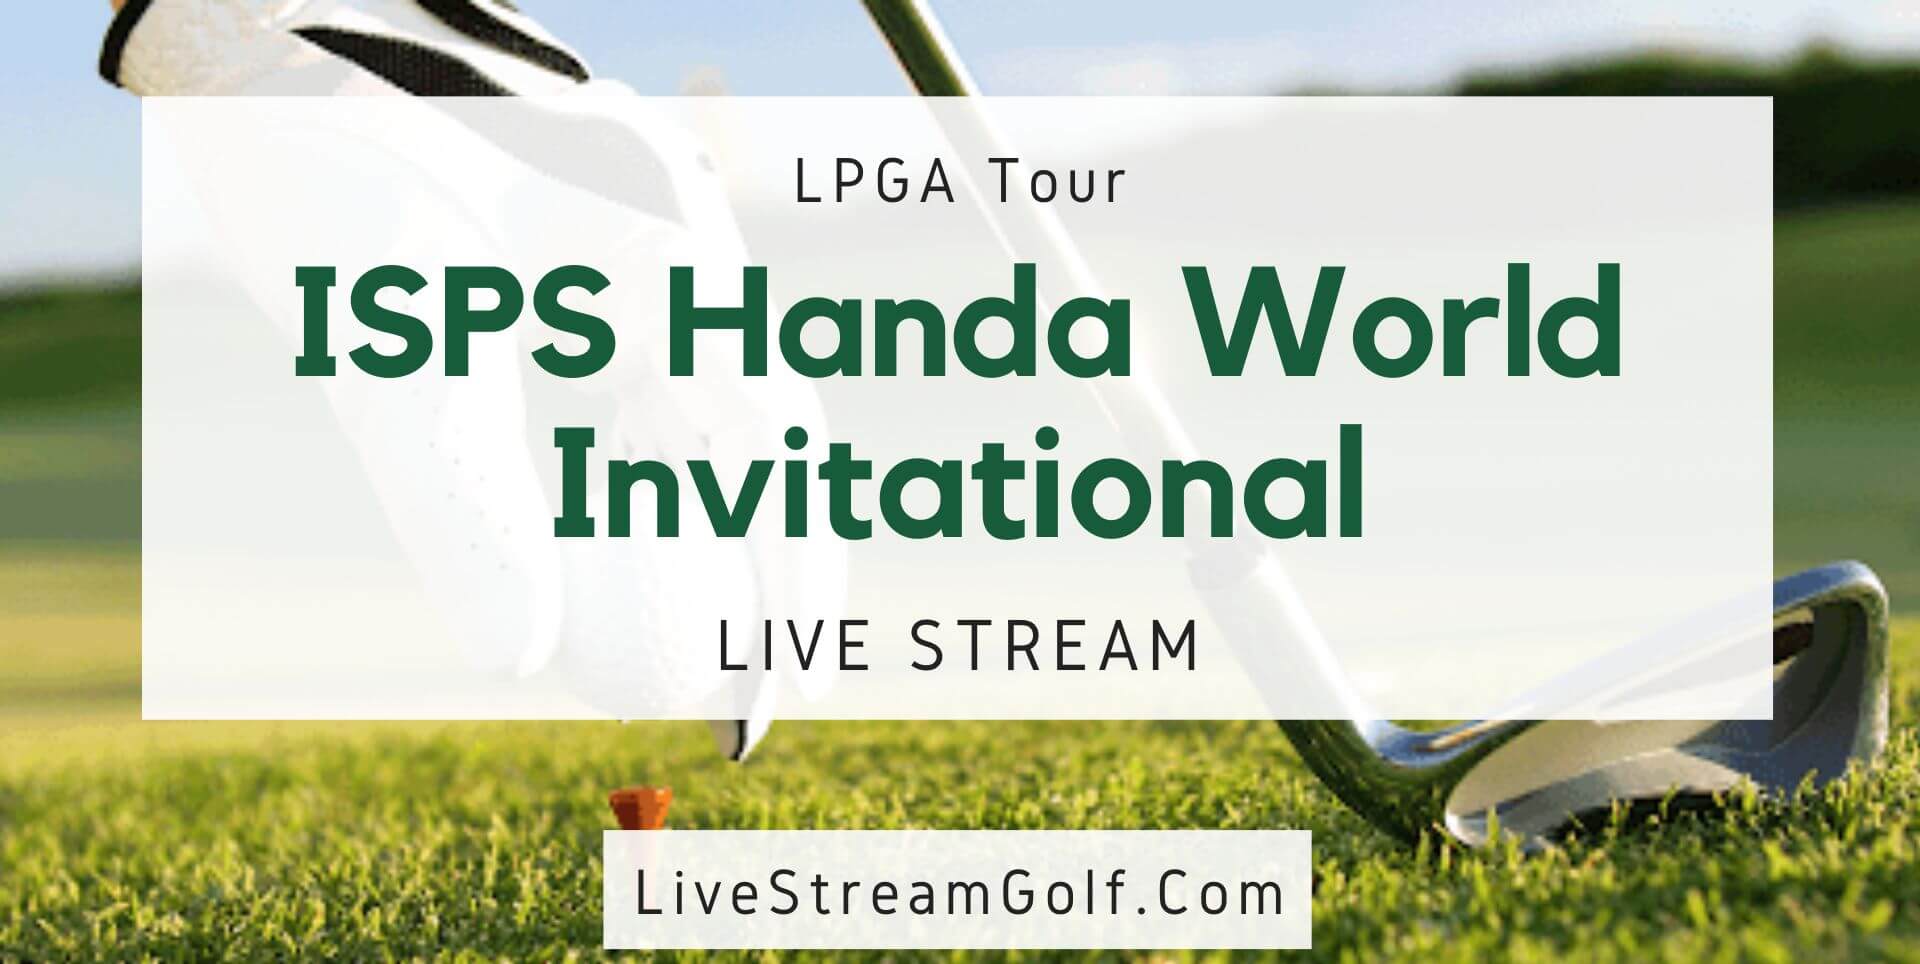 ISPS Handa World Invitational Day 1 Live Stream: LPGA Tour 2022